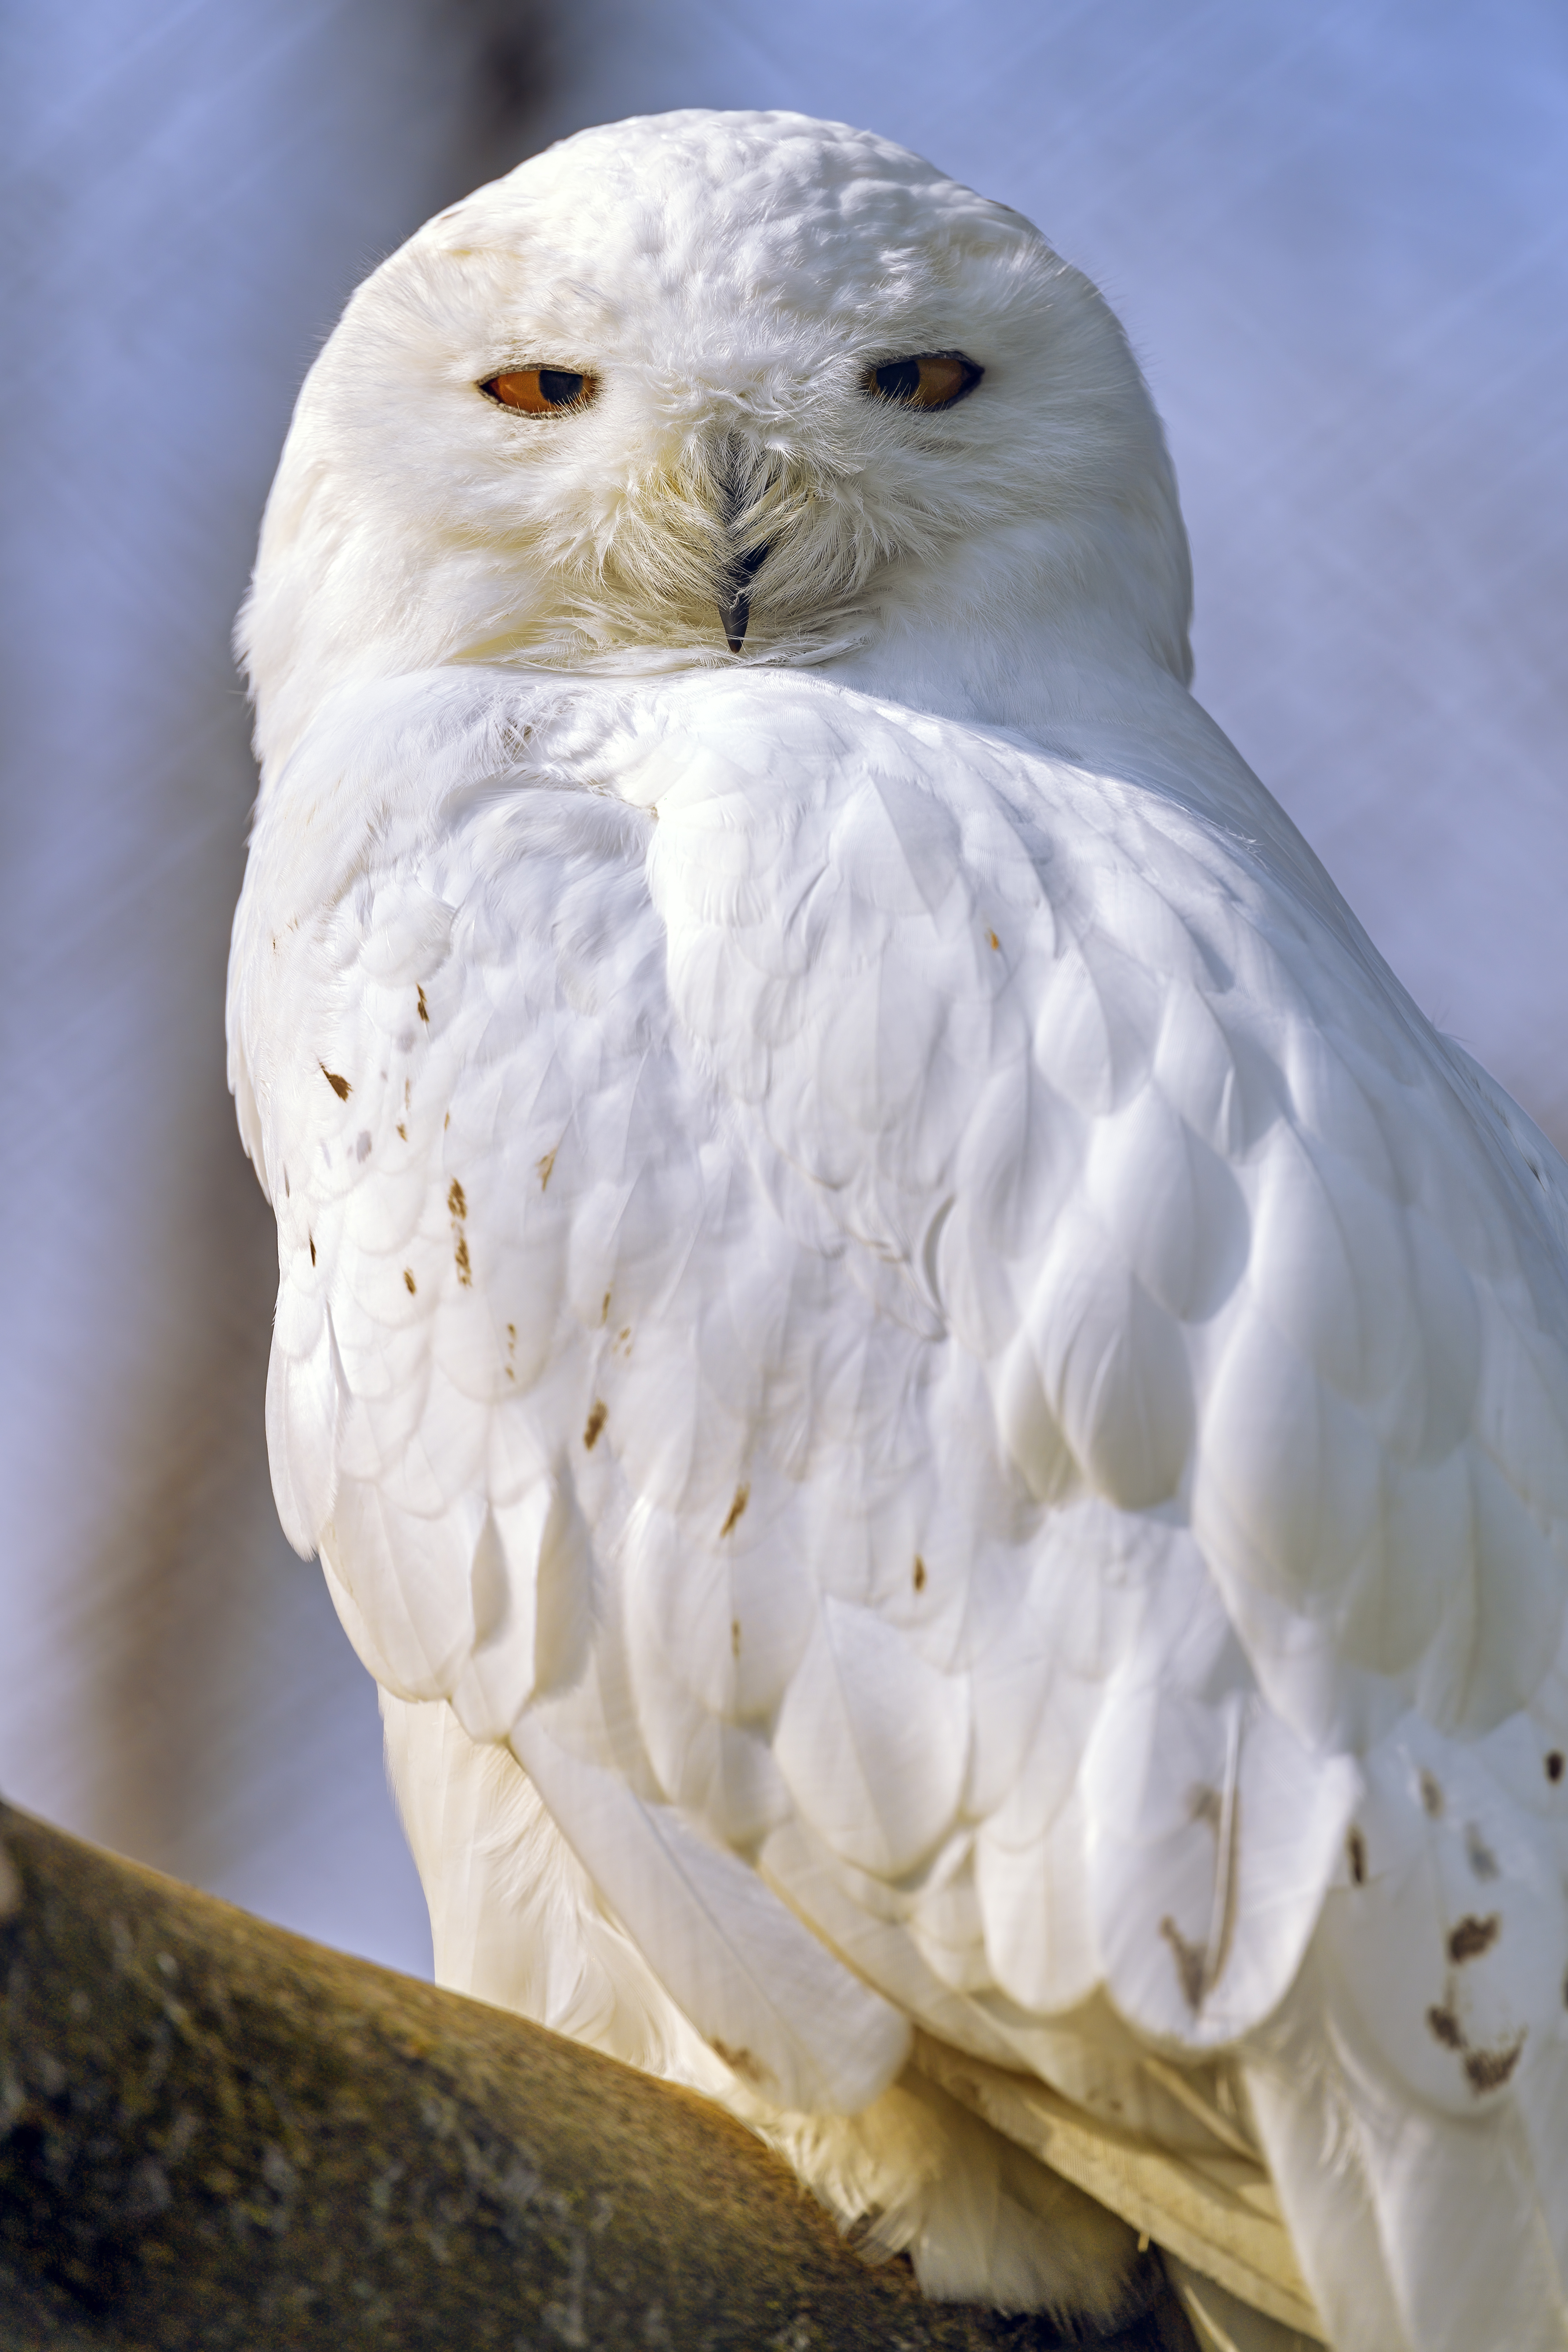 Owl Bird Glance Feathers White